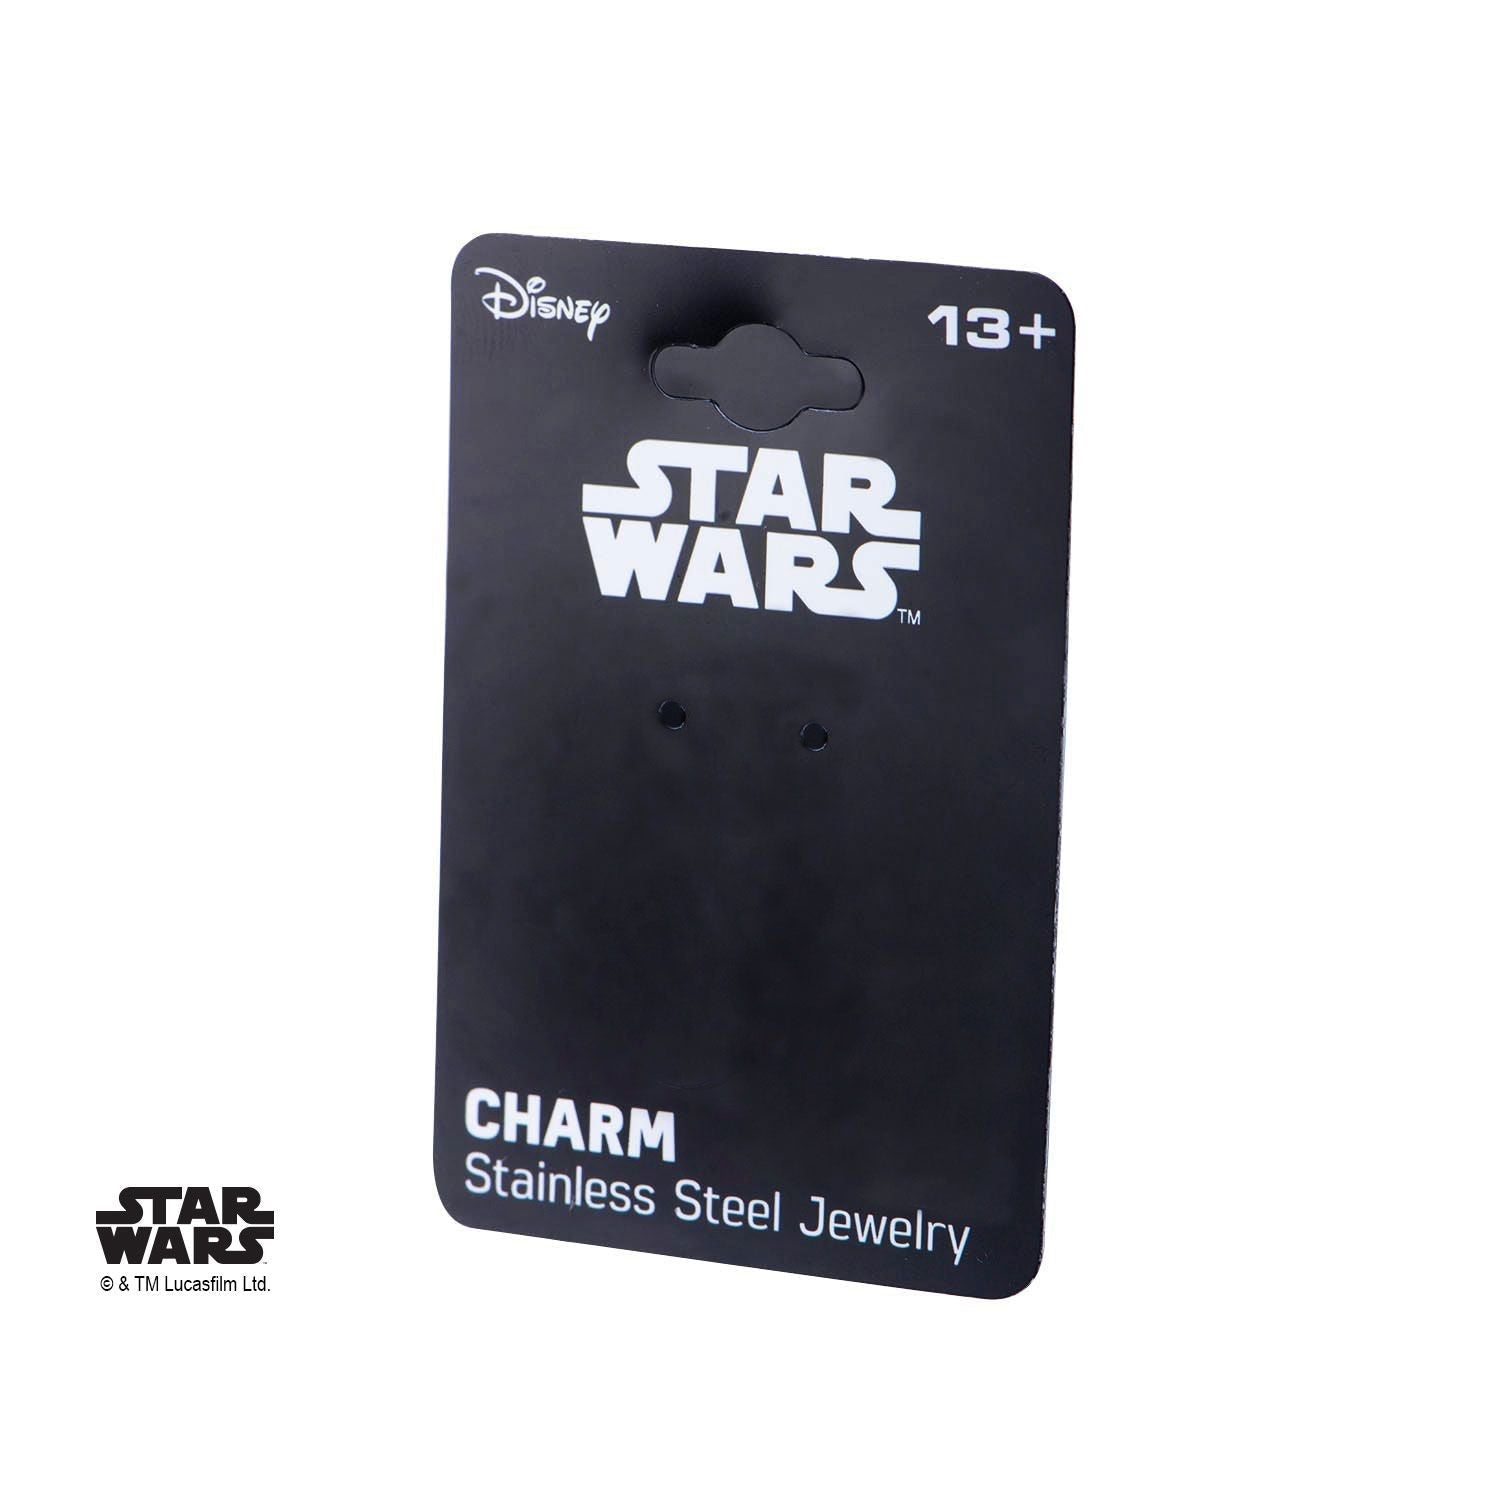 STAR WARS Star Wars Galactic Empire Symbol Bead Charm A -Rebel Bod-RebelBod